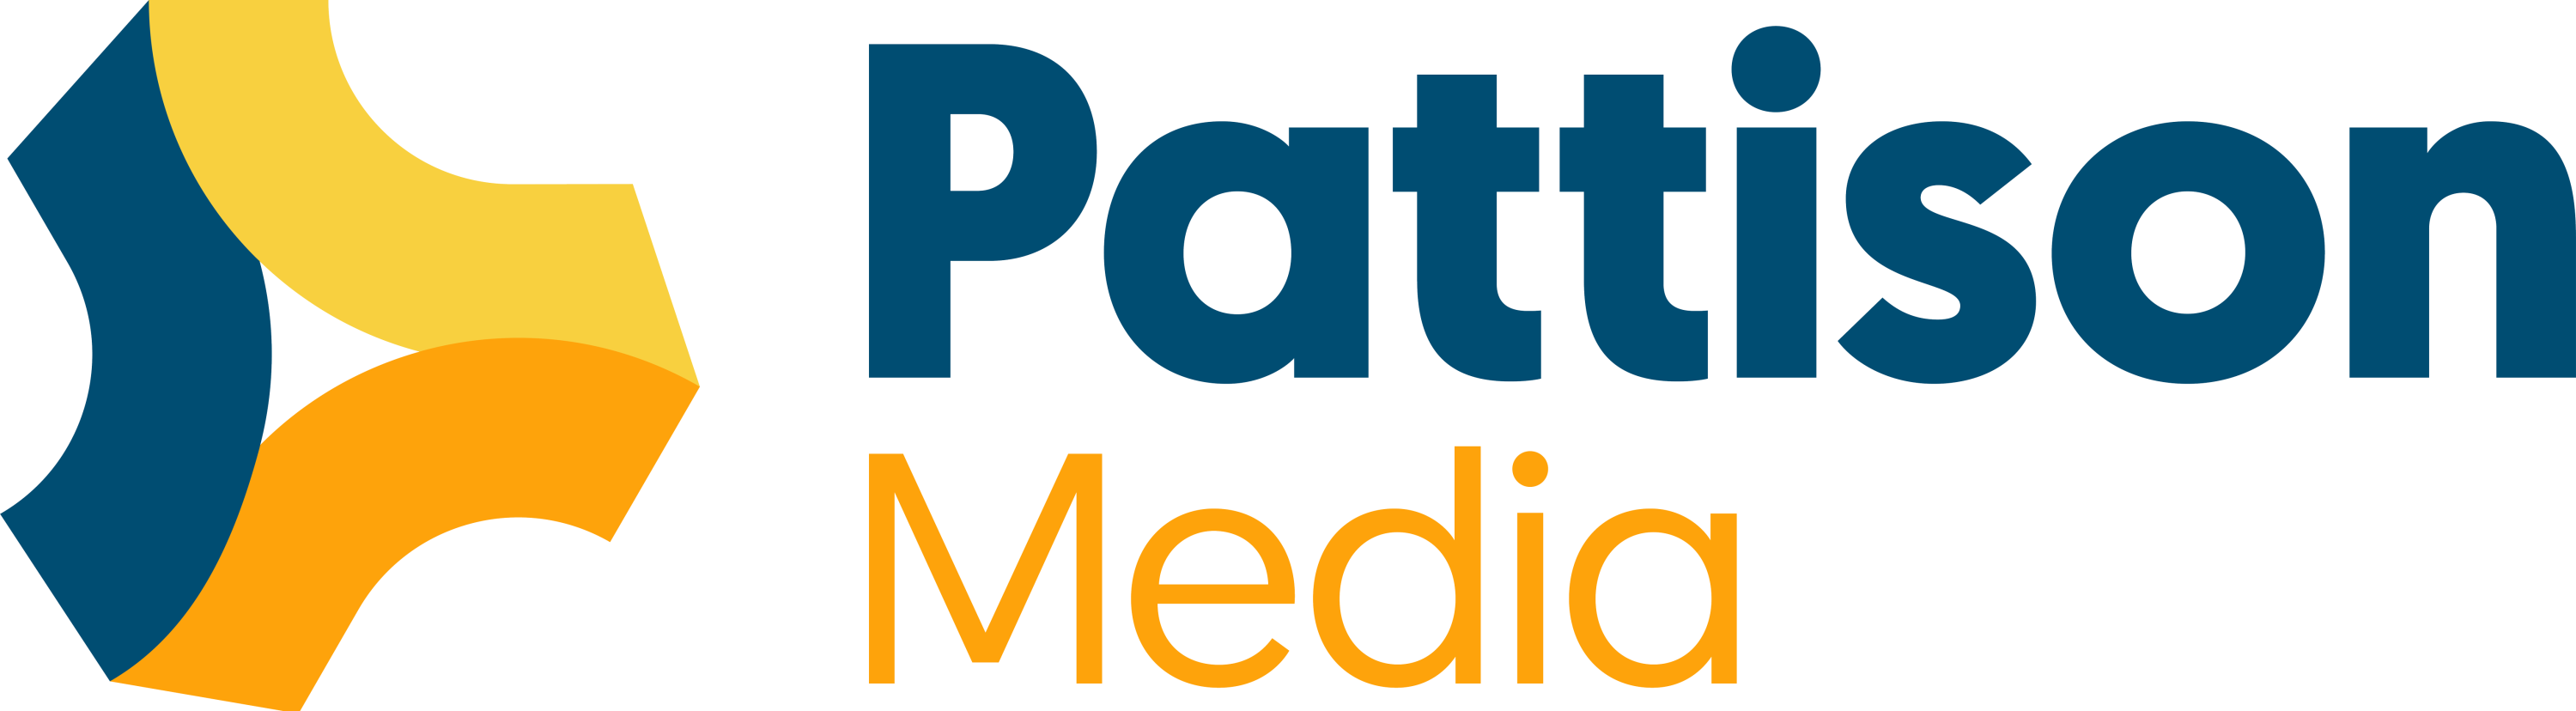 Pattison Media  News Portals - CHAT News Today